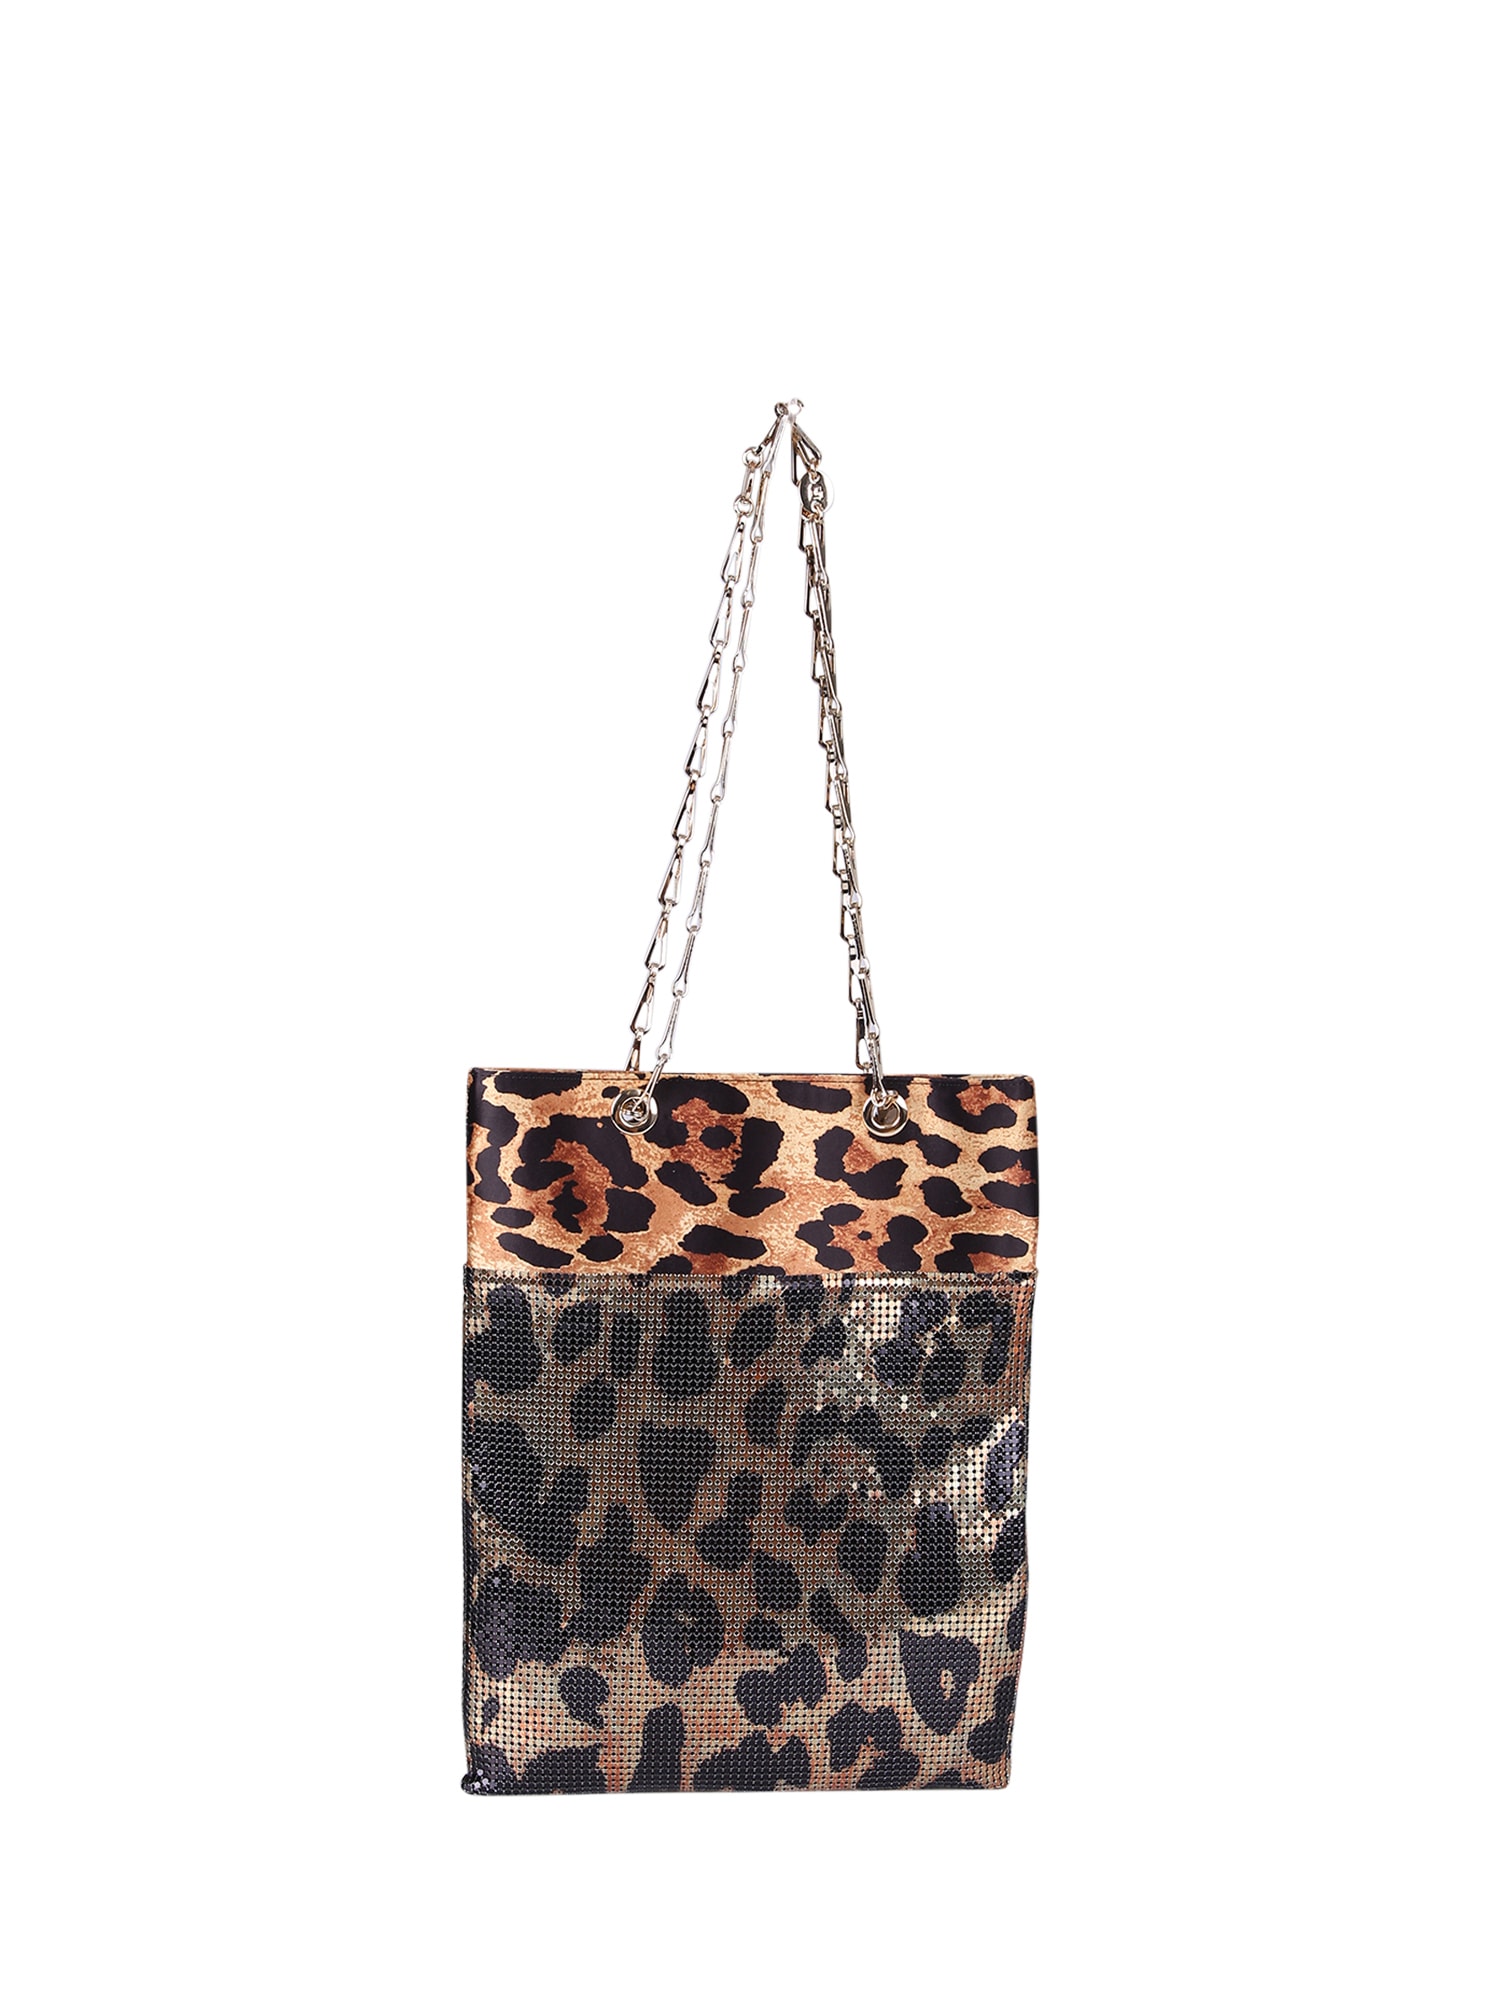 Paco Rabanne Leopard Motif Bag